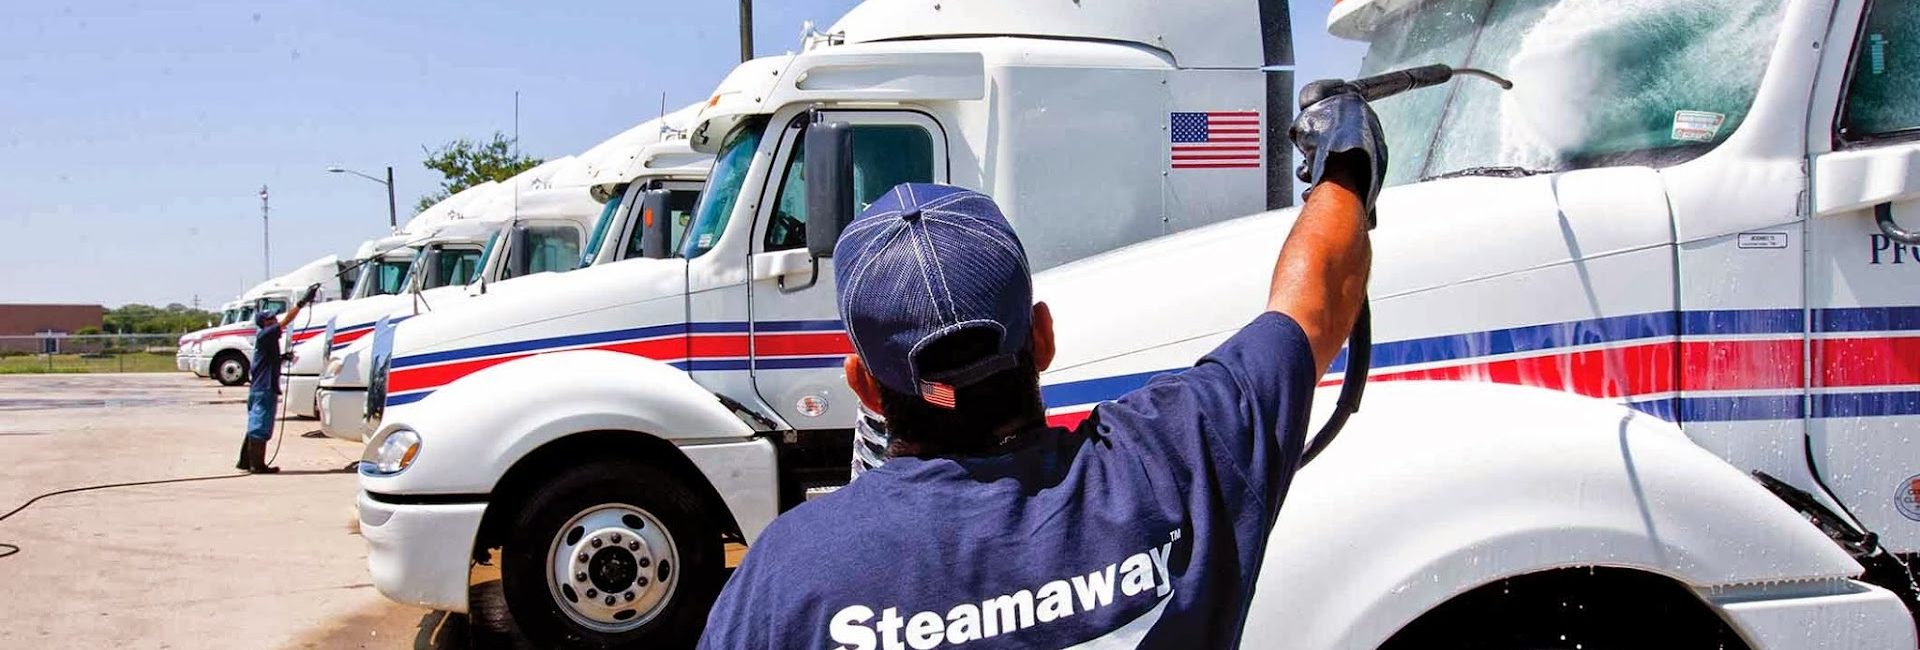 Steamaway, Inc. 6